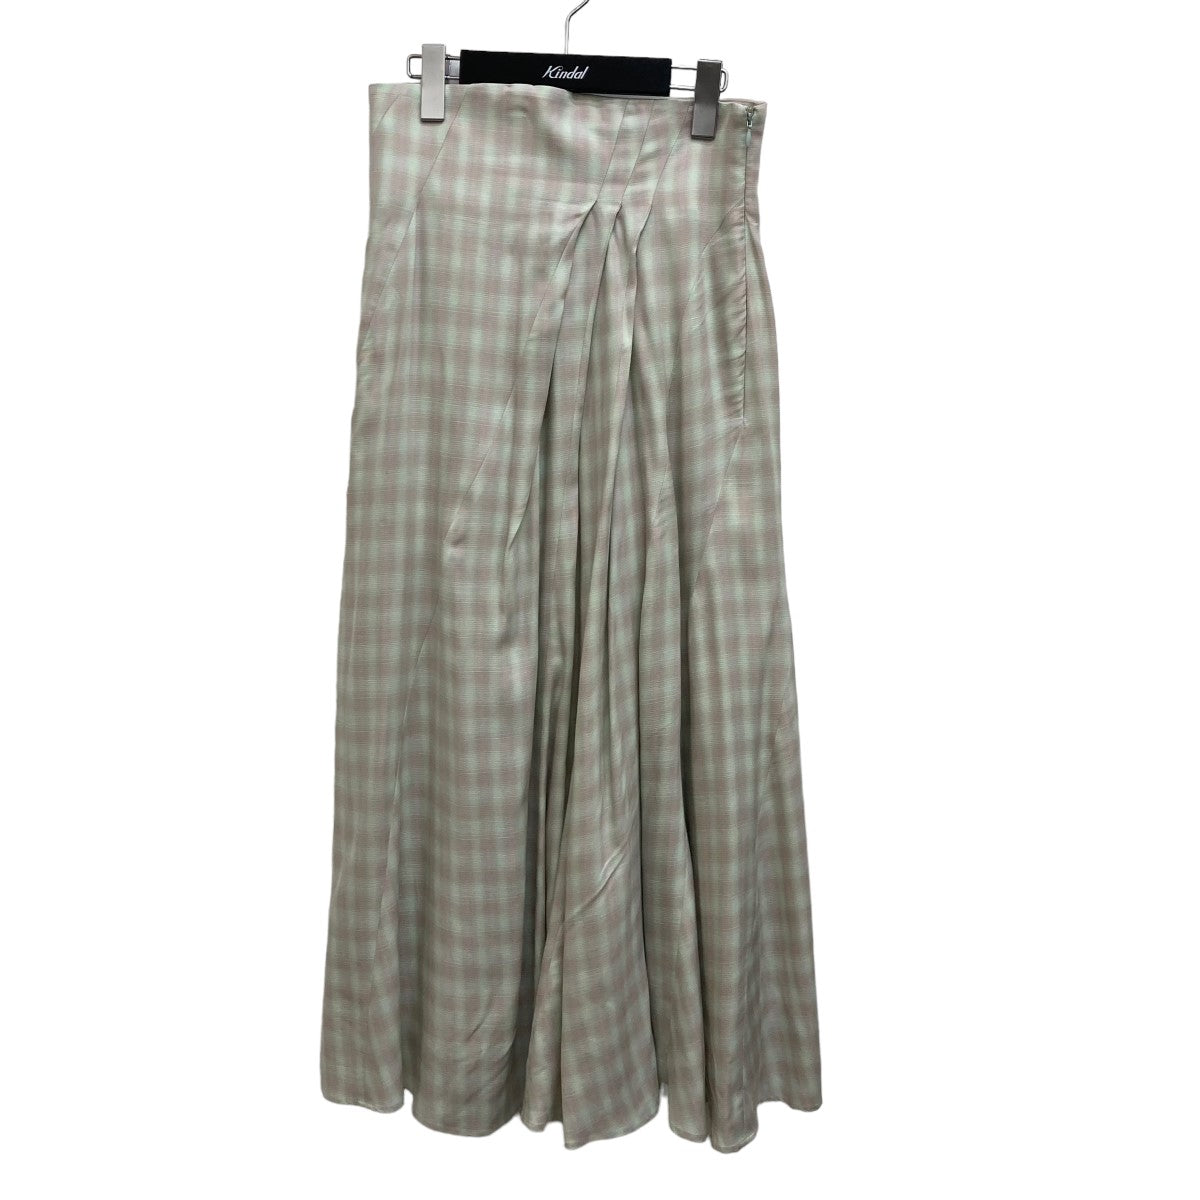 Linen Mix Ombre Check Flare Skirt スカート